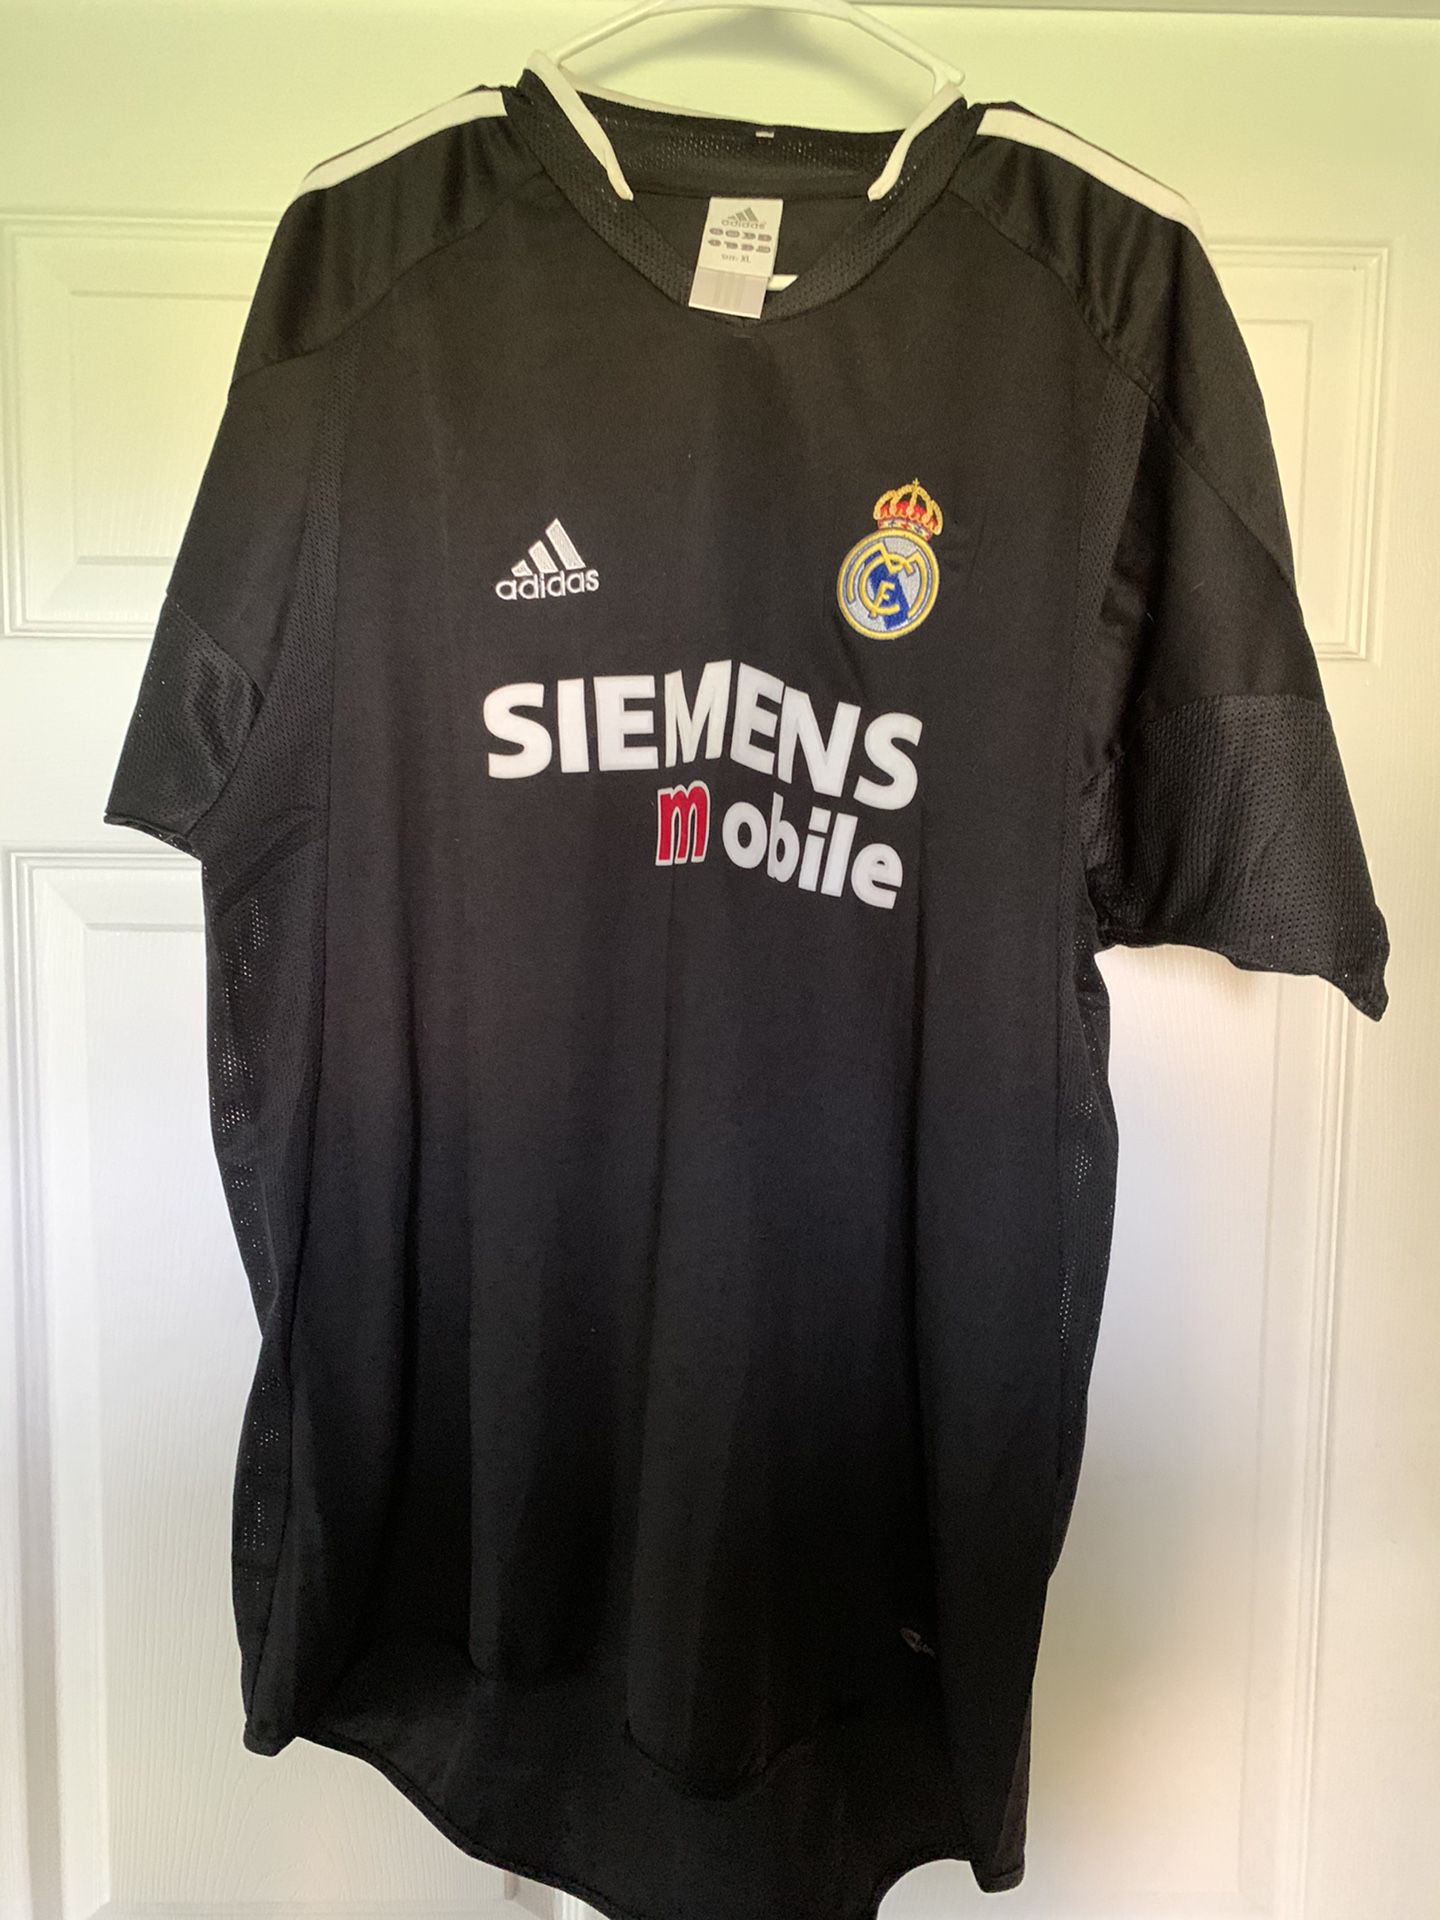 Real Madrid adidas shirt size XL